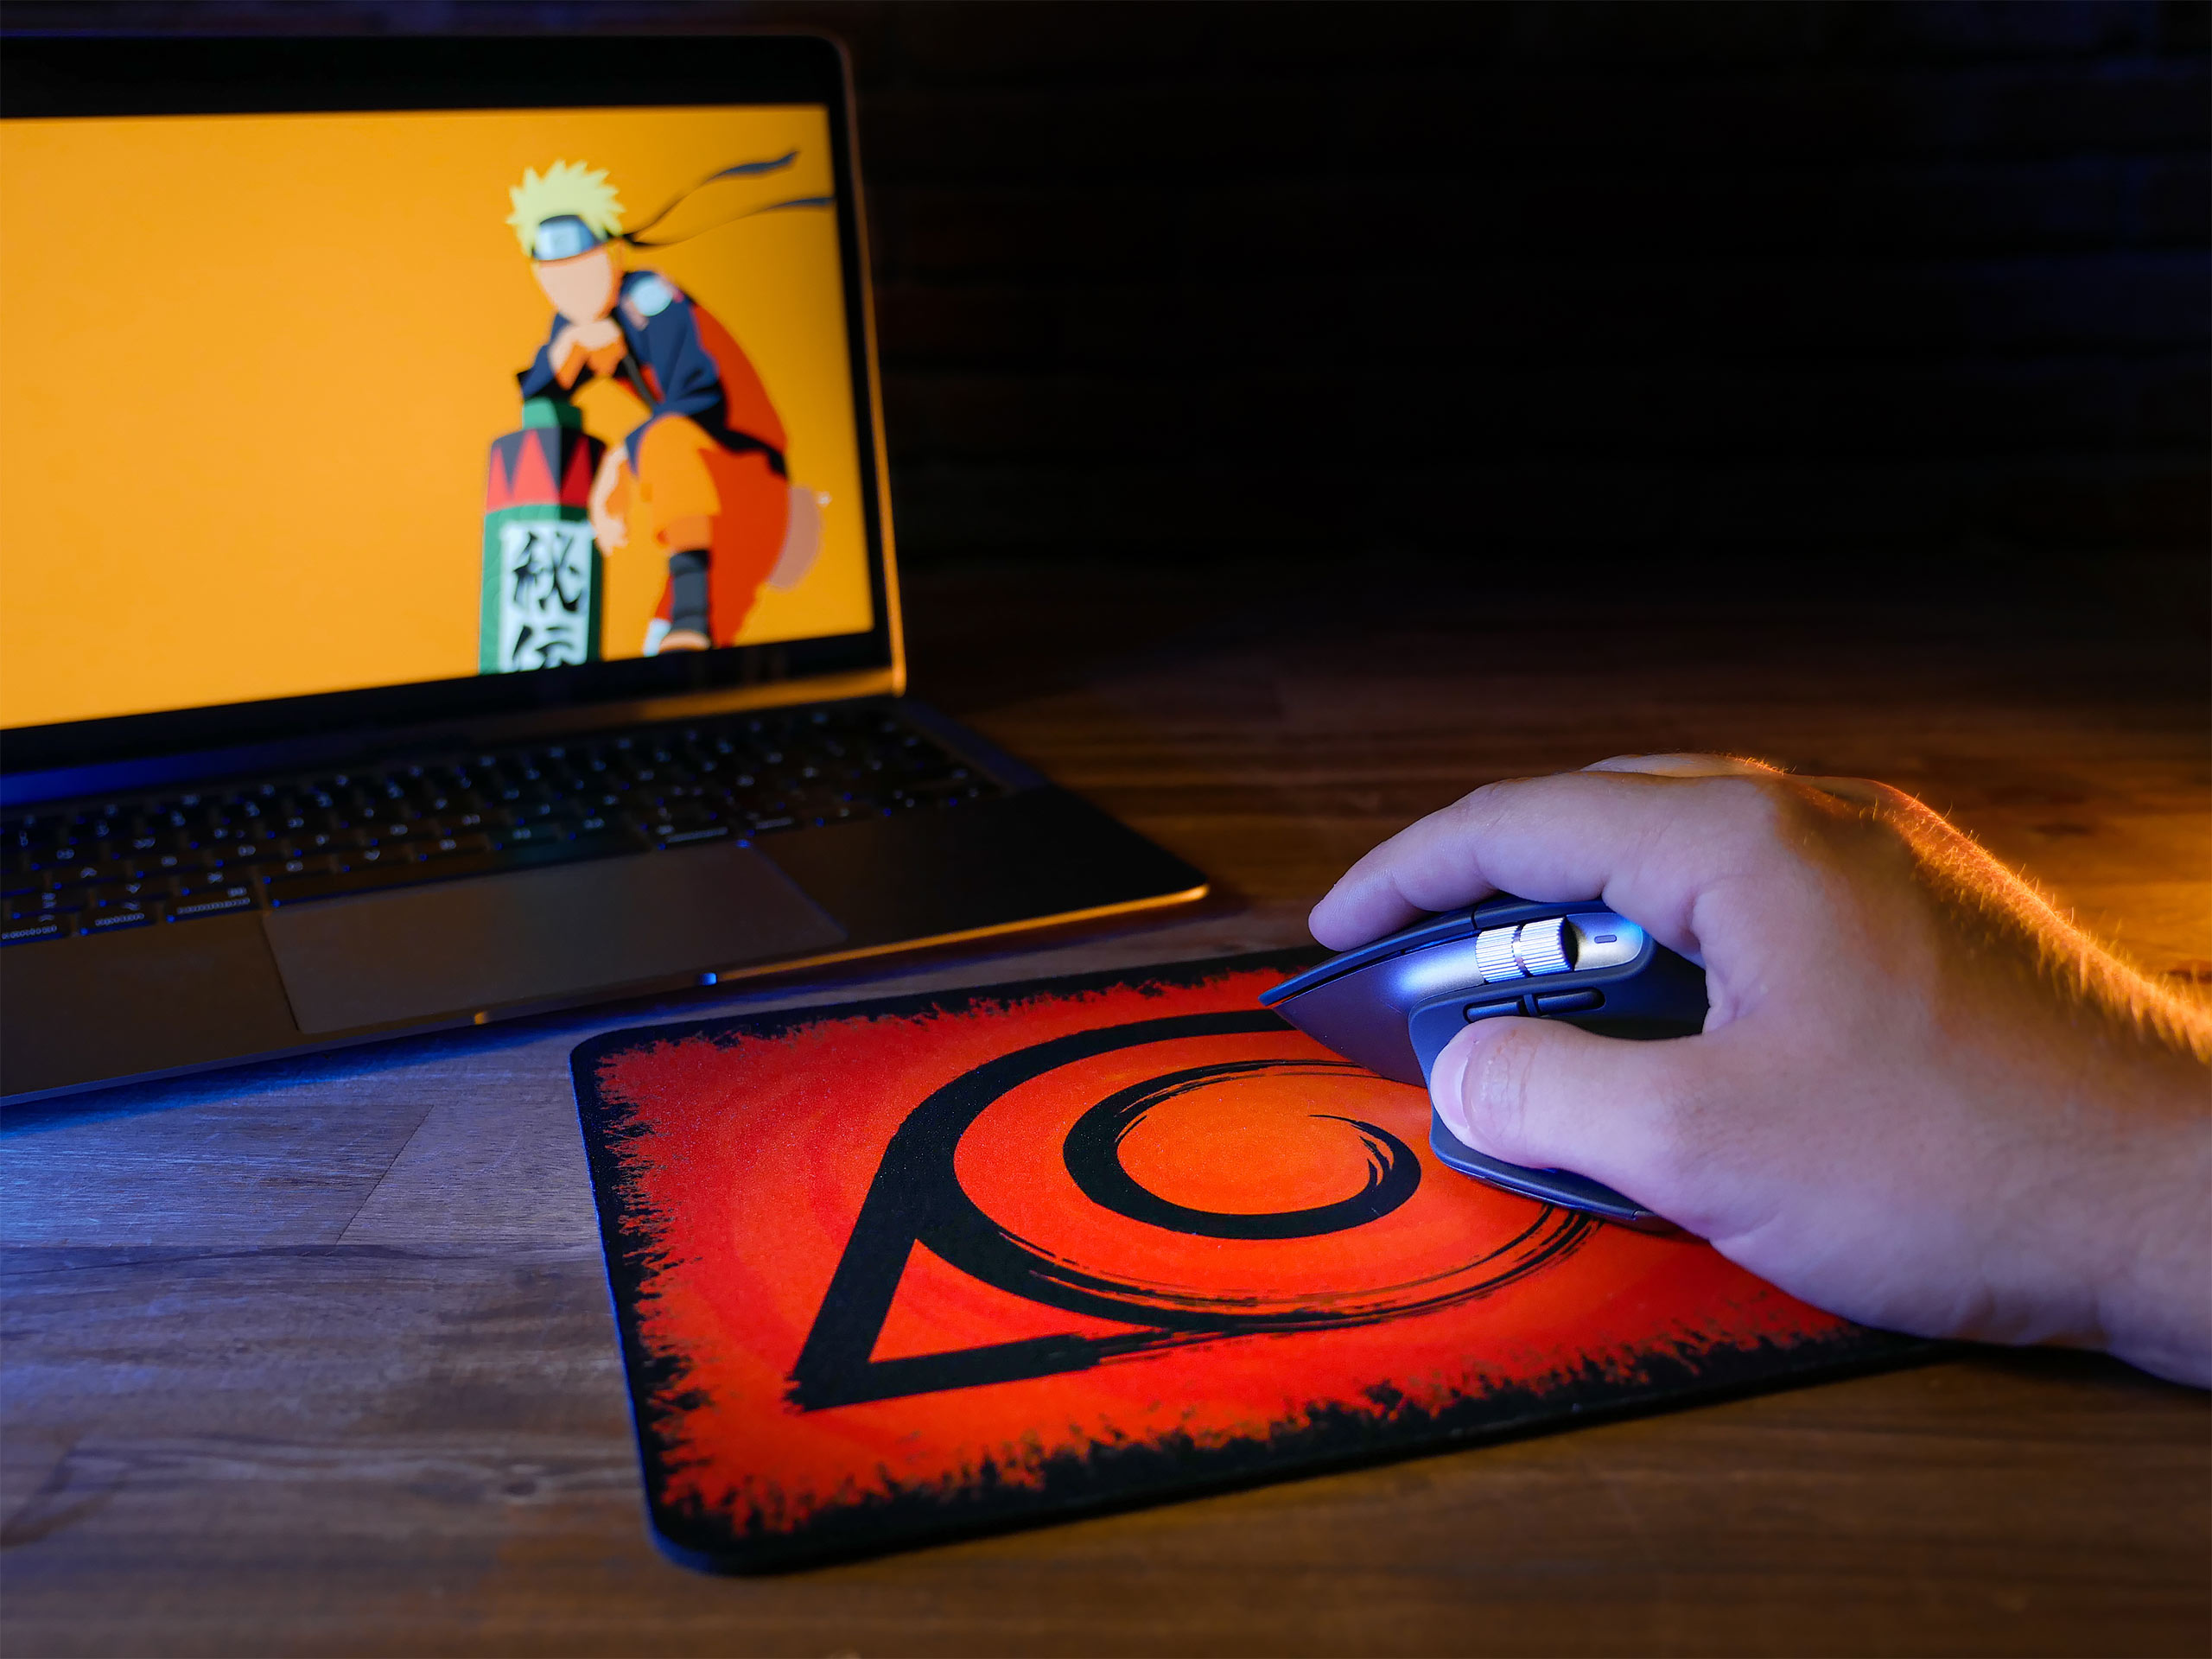 Naruto - Konoha Symbol Mousepad